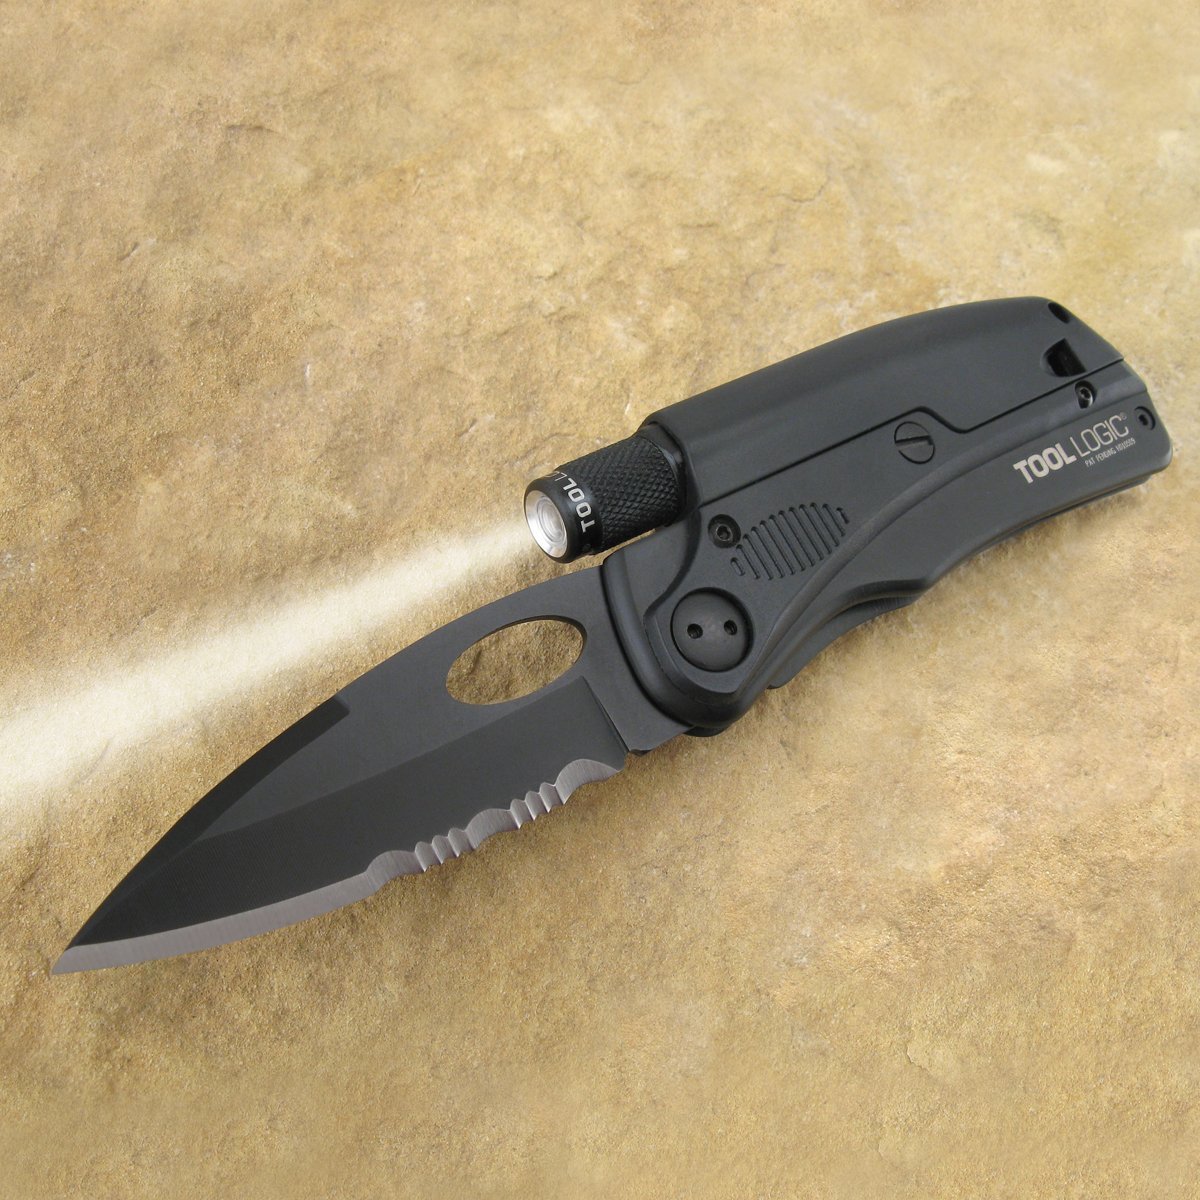 SLP2 Tactical Folding Serrated Knife w/LED Flashlight, Fire Starter, Whistle. 1200 x 1200